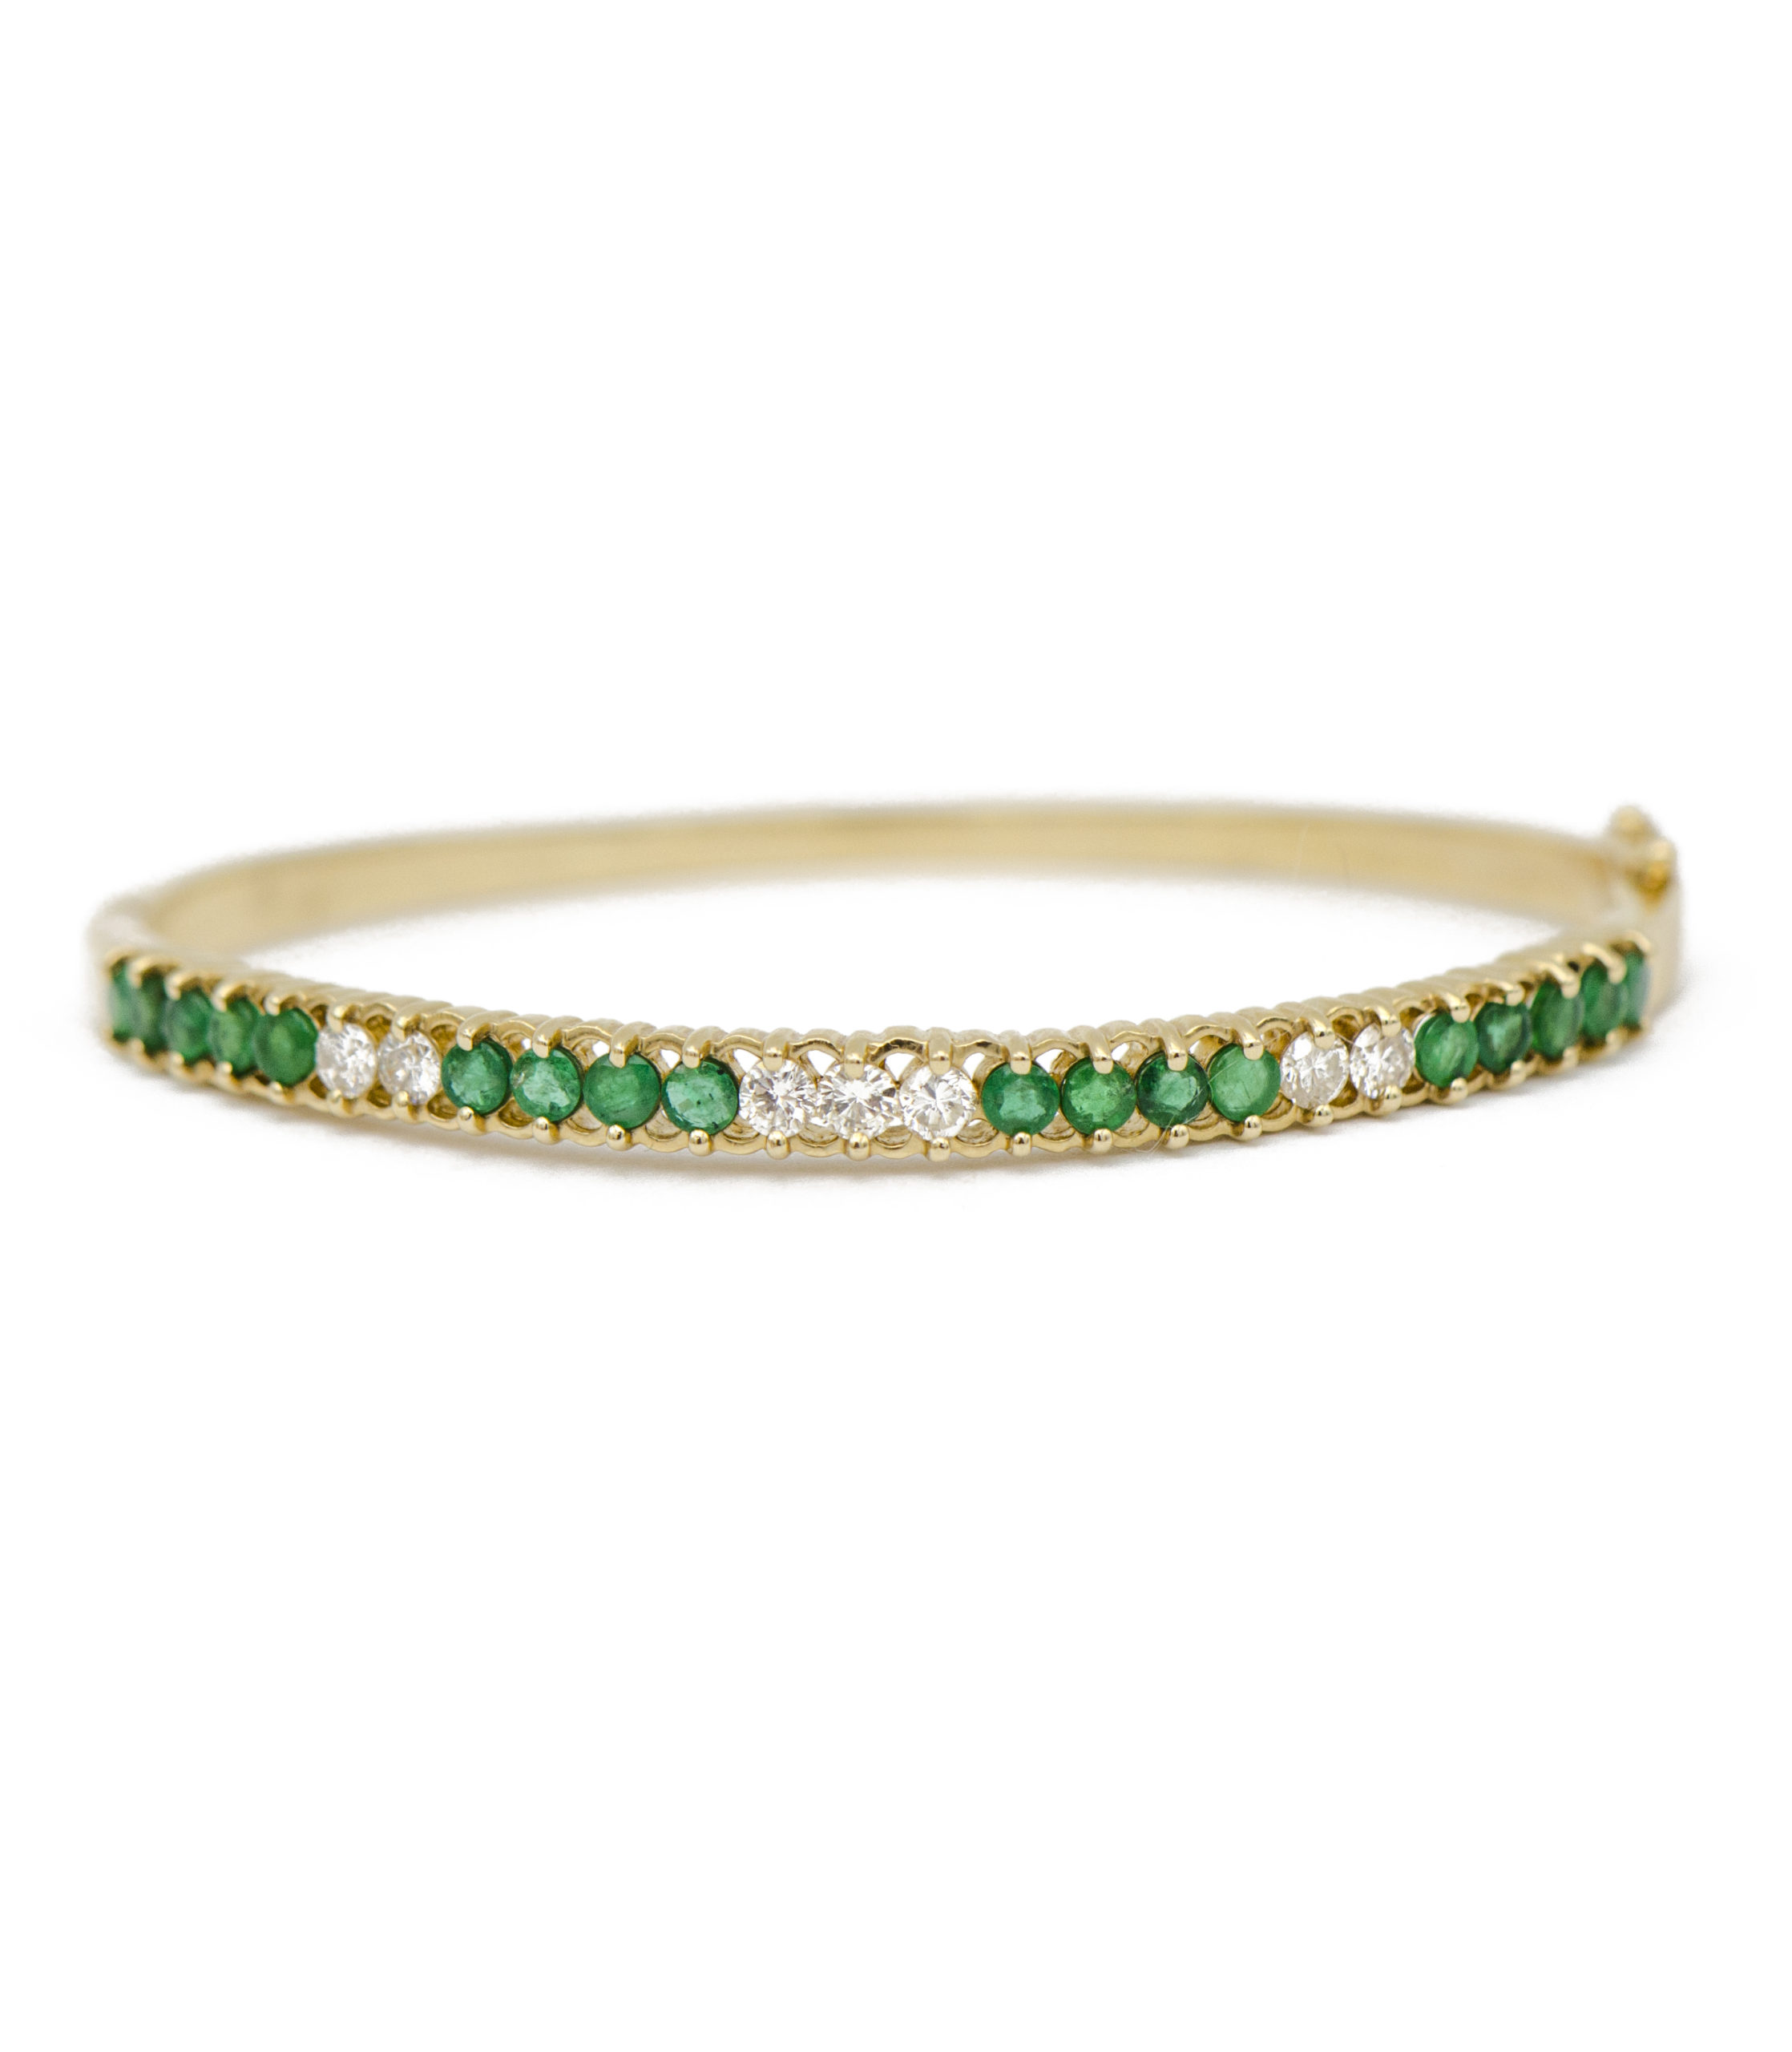 CRHP601053 - Agrafe cuff bracelet - Yellow gold, diamonds - Cartier